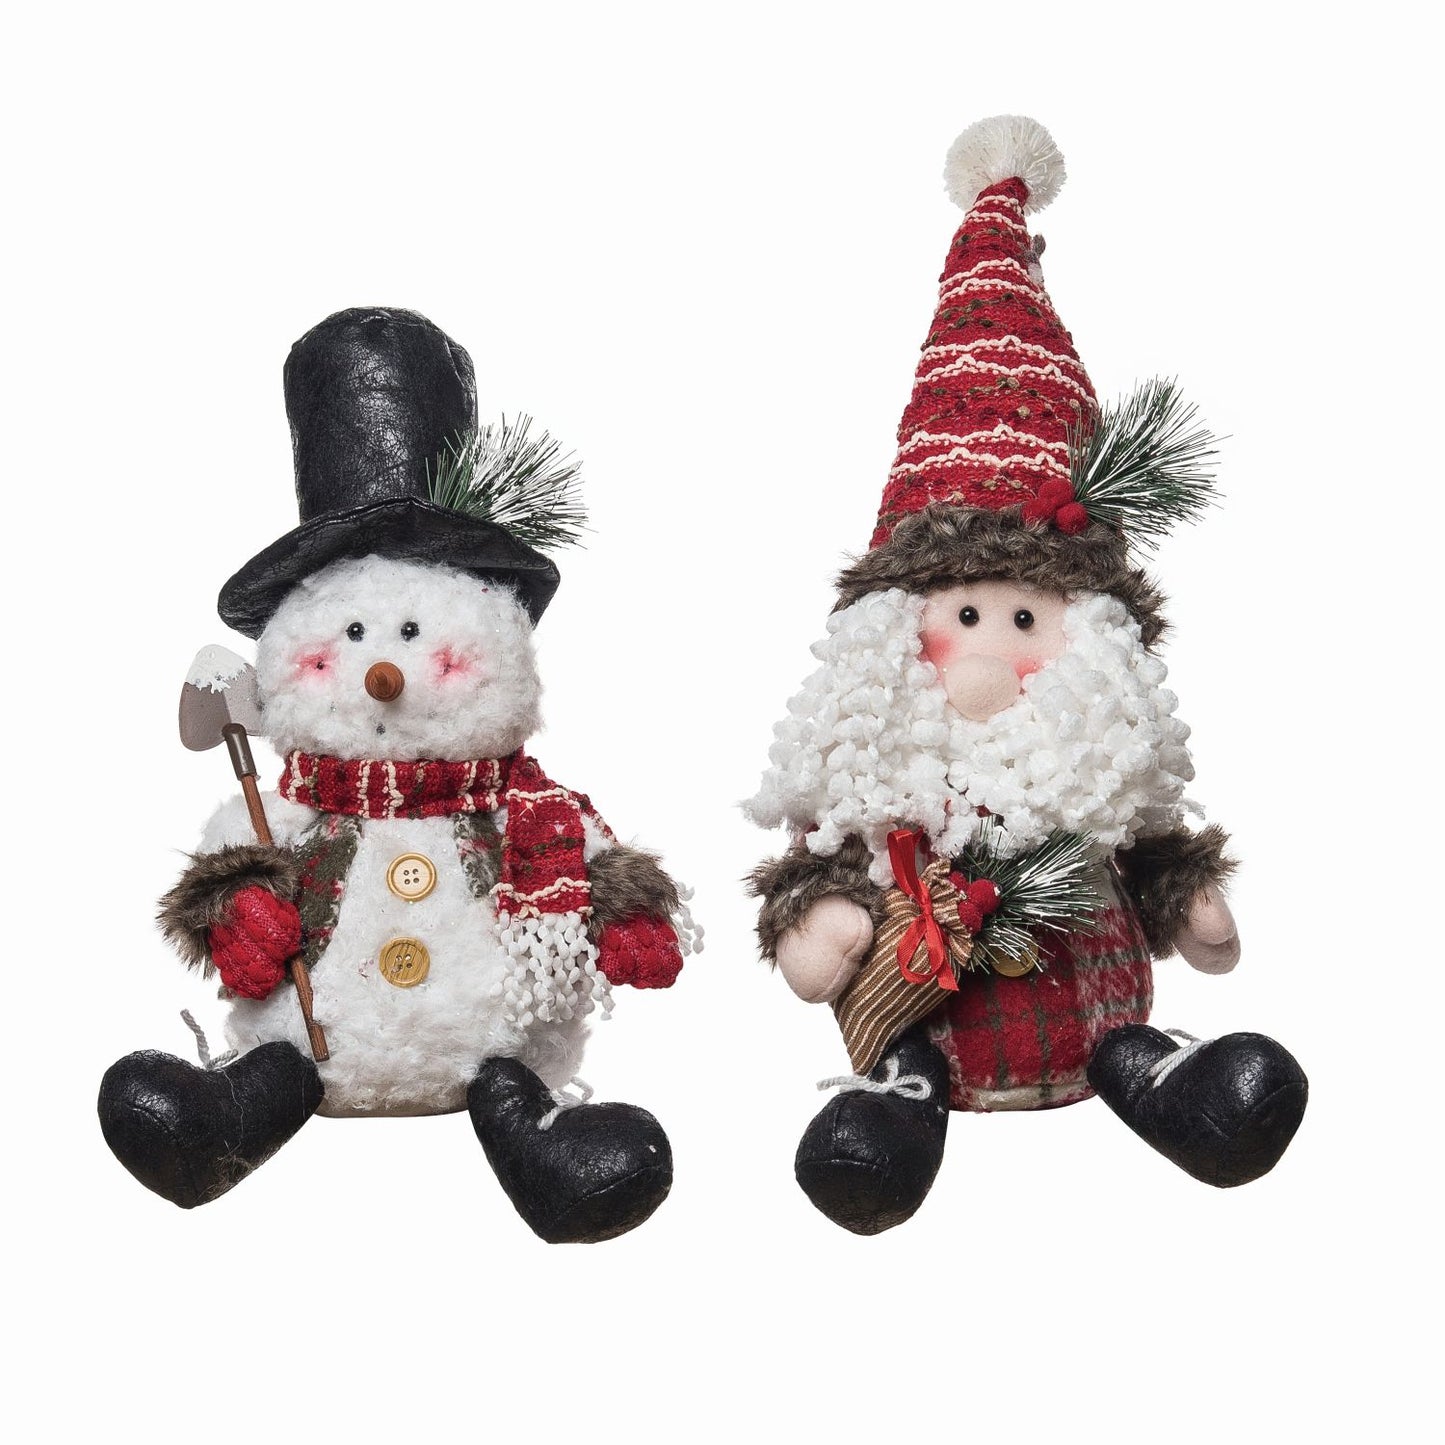 Transpac Plush Festive Santa/Snowman Sitter, Set Of 2, Assortment